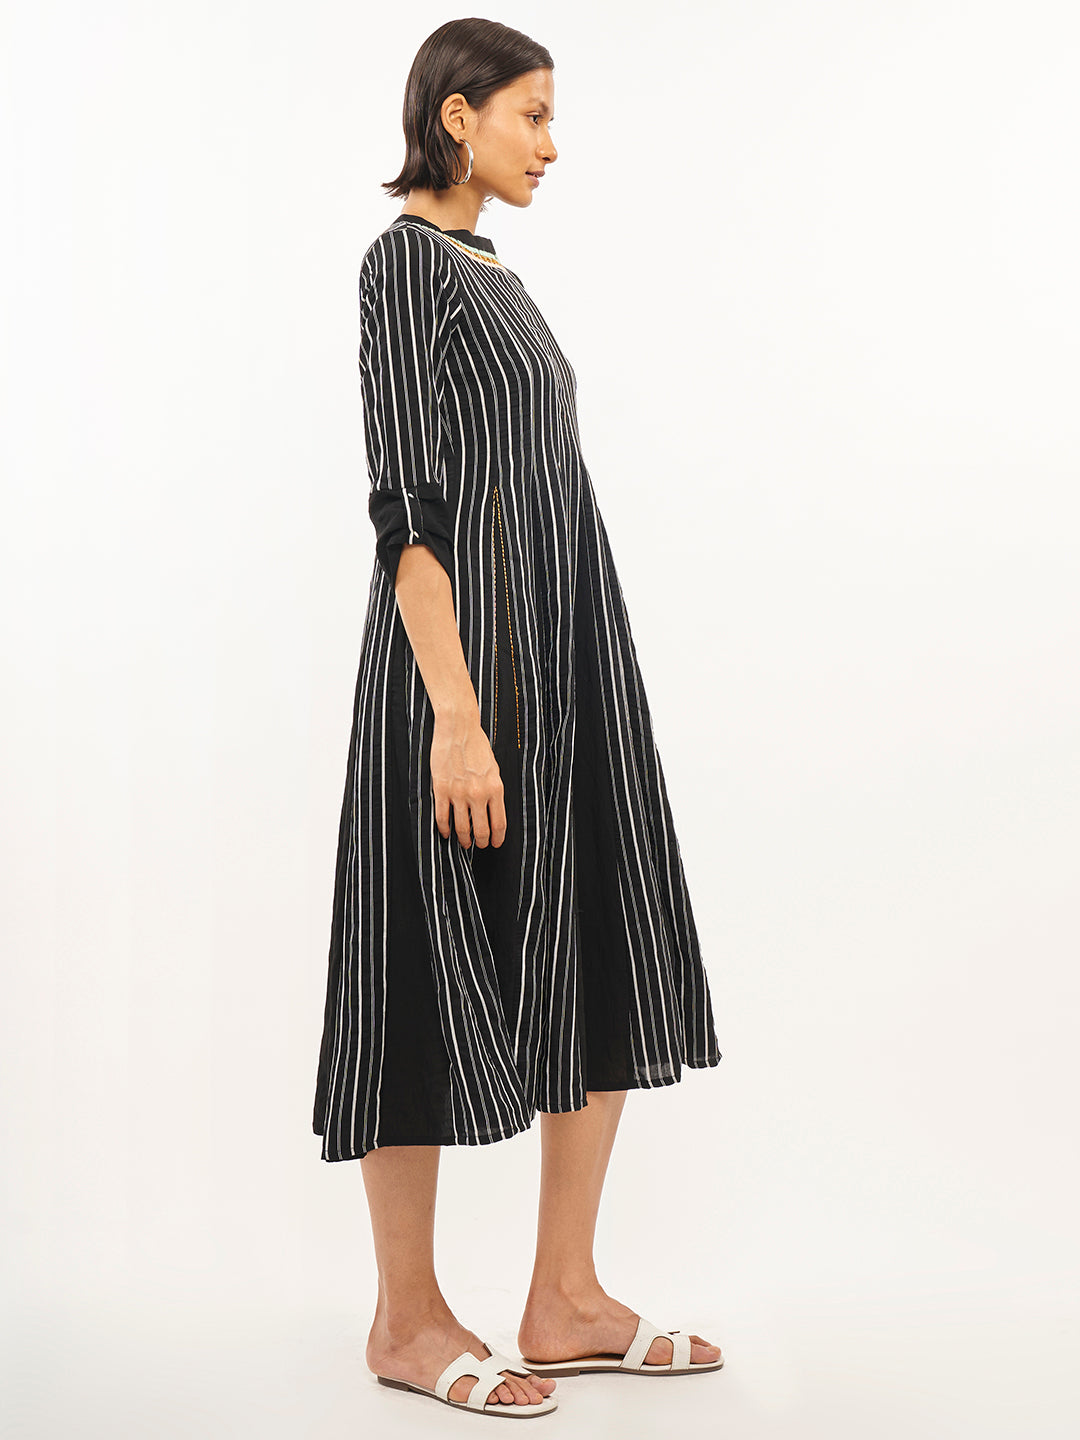 Black Striped Flared Dress - ARH148